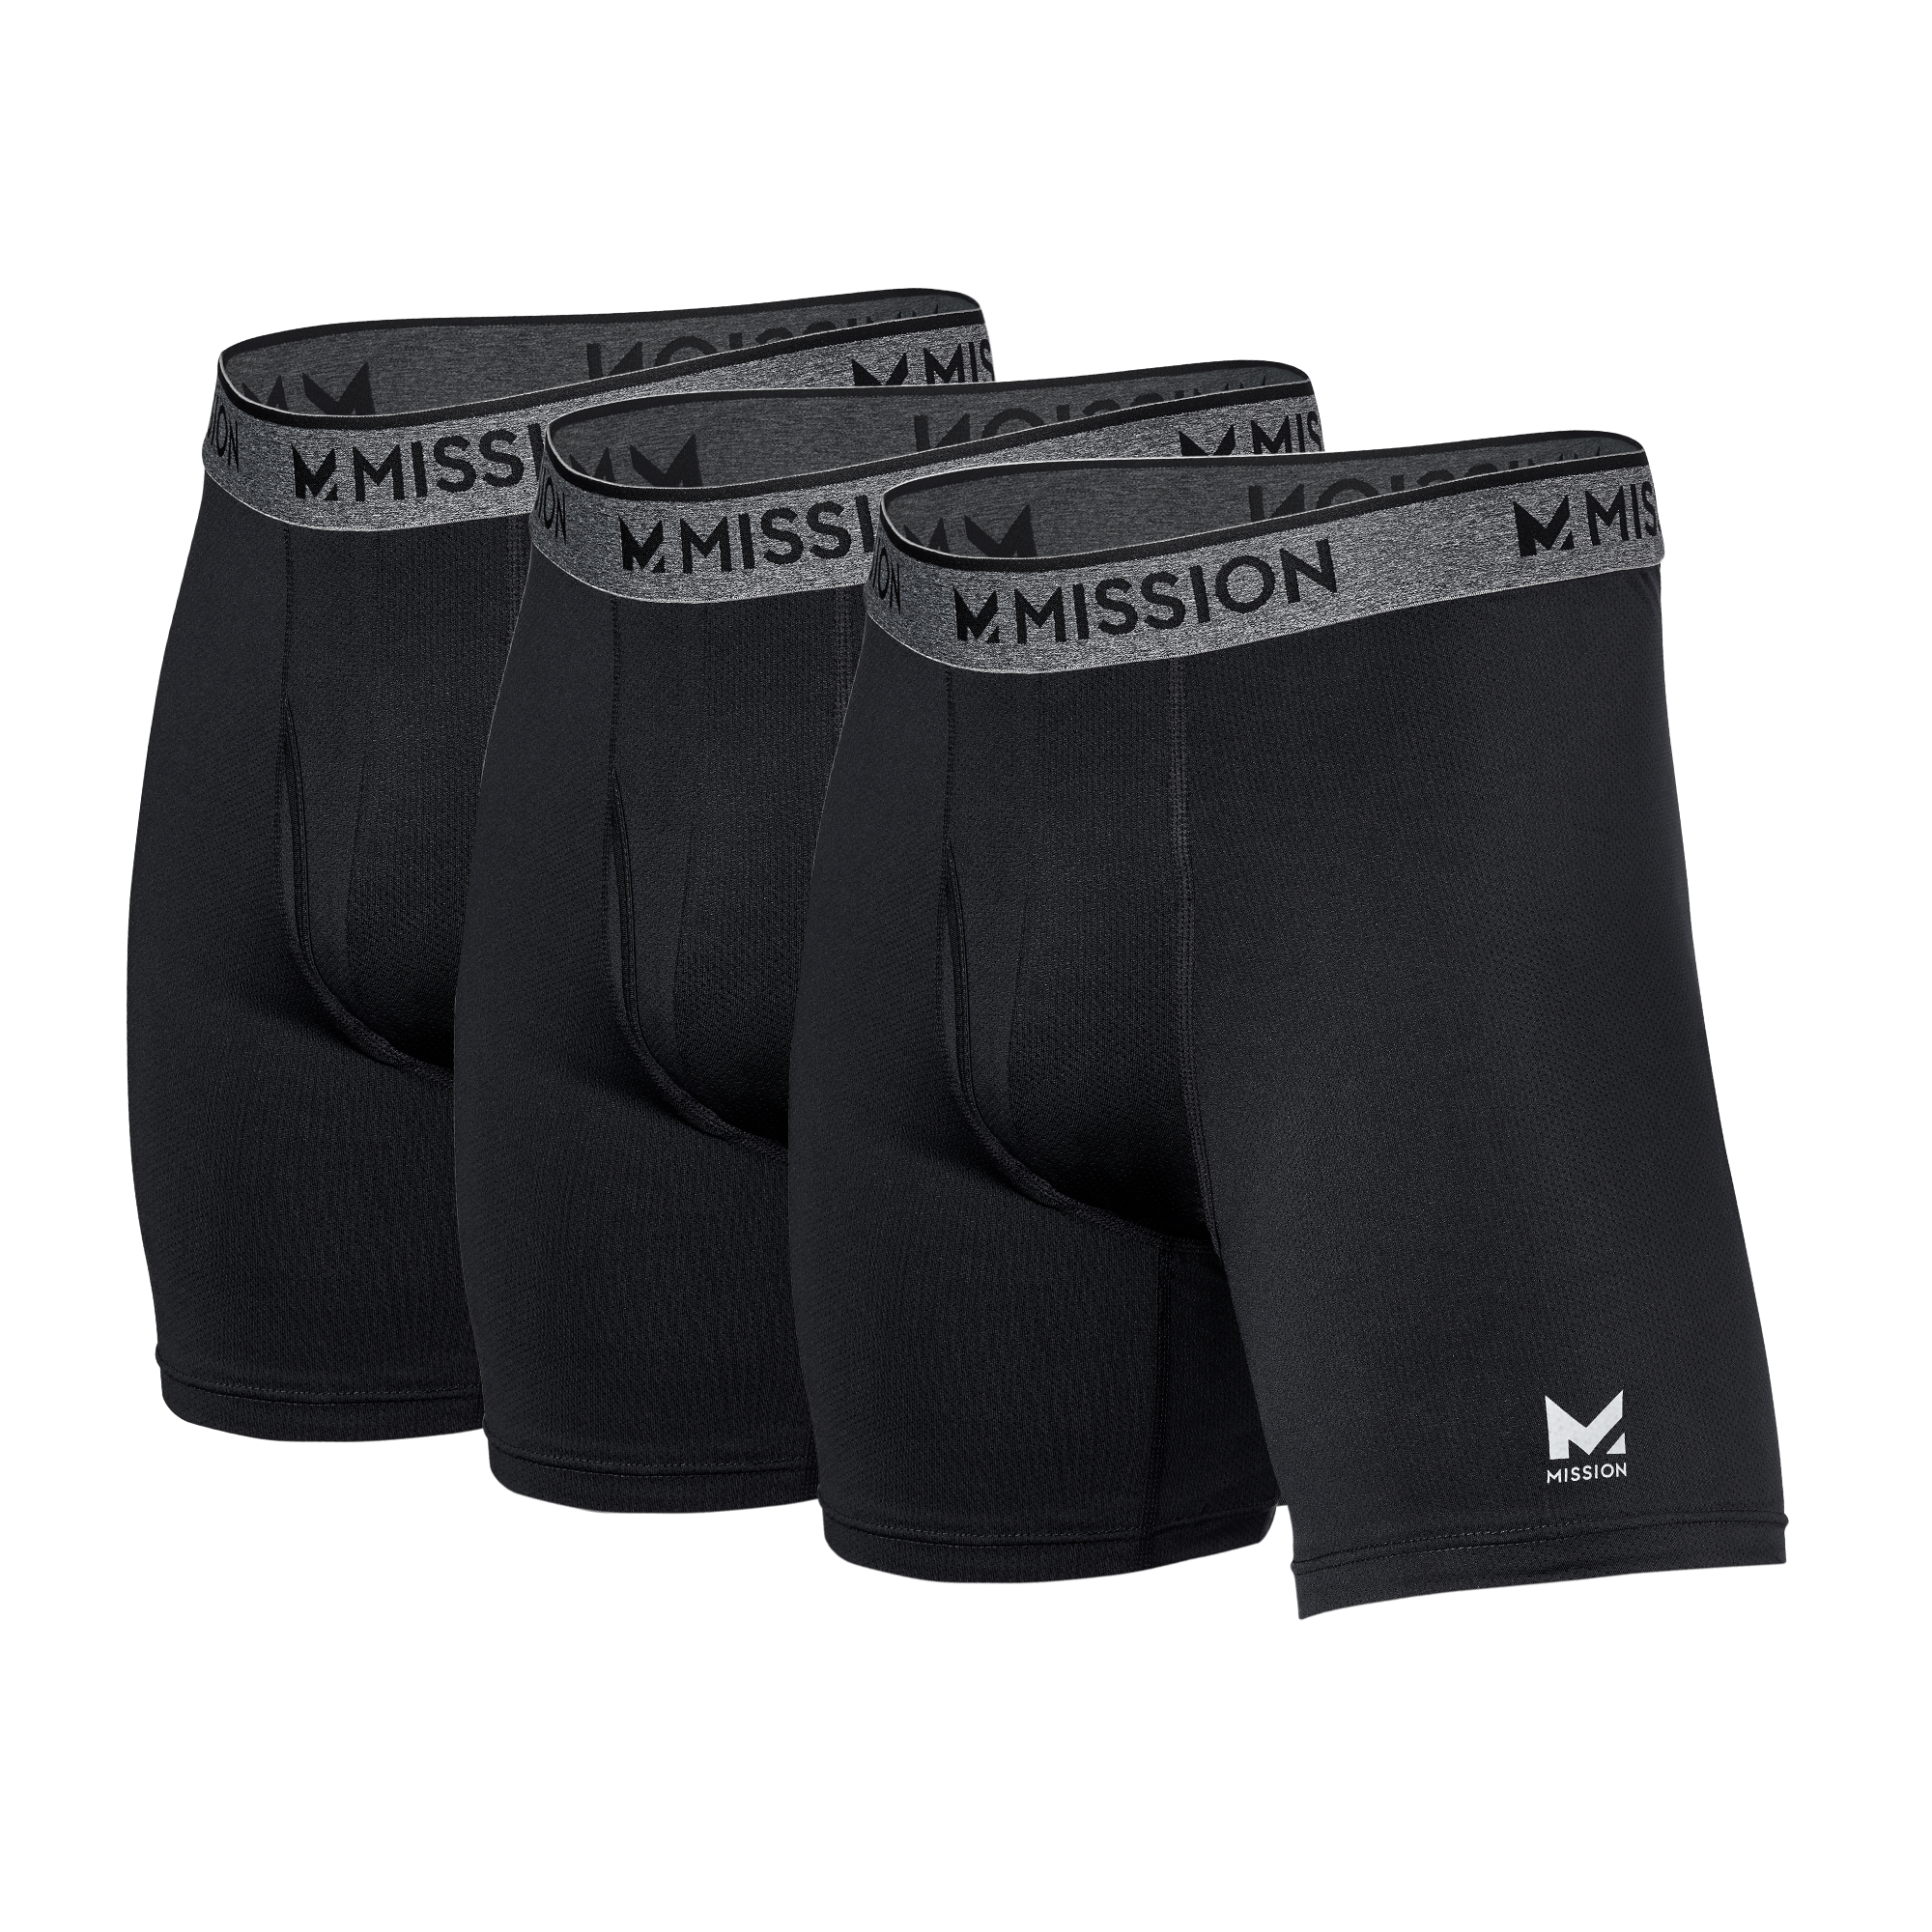 Performance Mesh Boxer Brief (3pack) Boxer Briefs MISSION Black / Black / Black S 